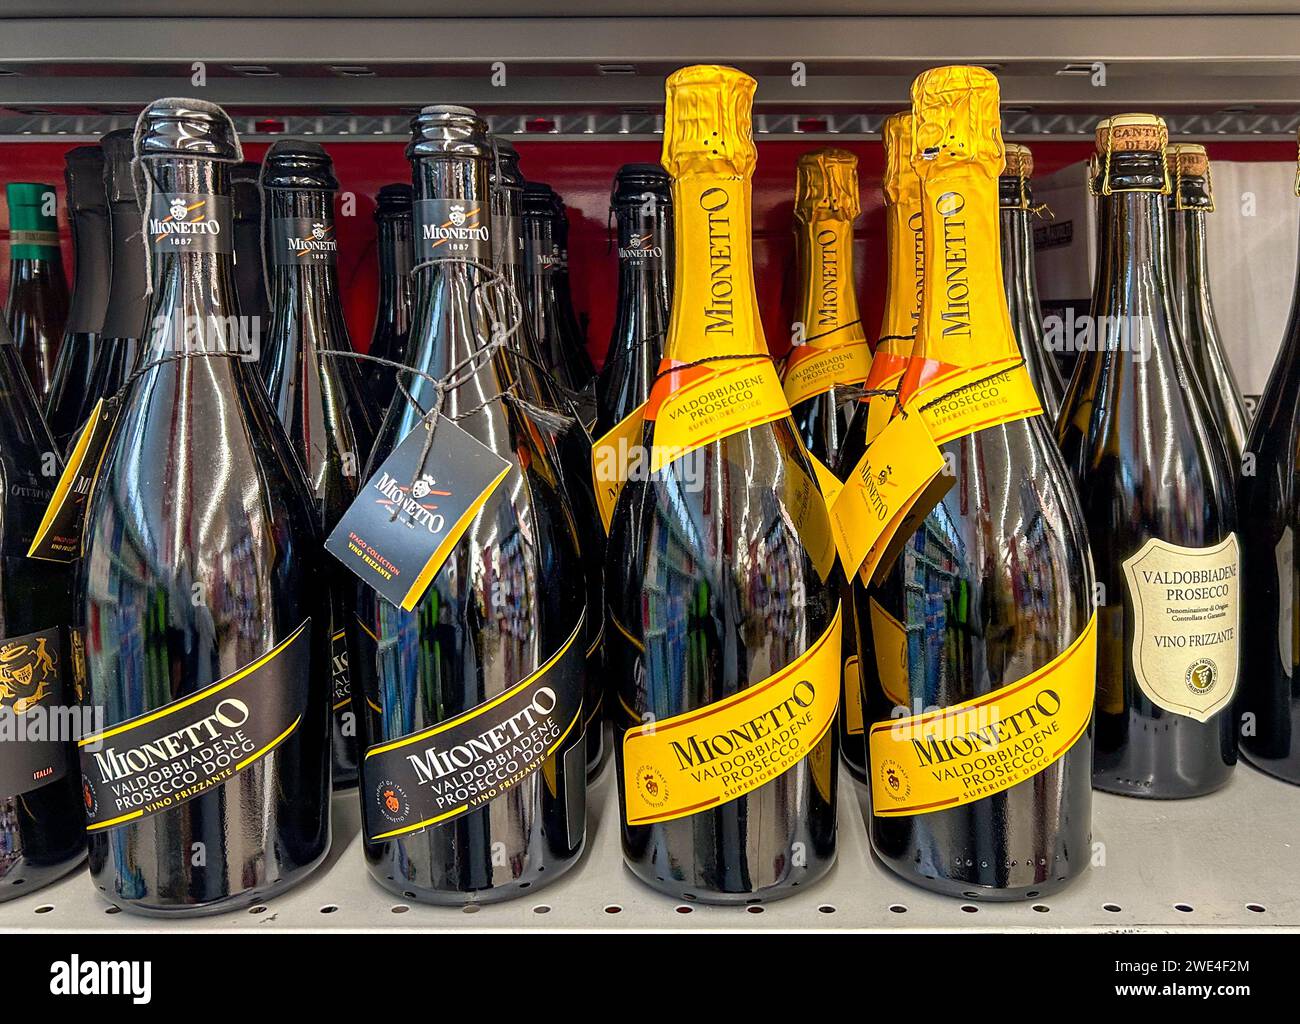 Italy - January 17, 2024: Valdobbiadene Prosecco DOCG sparkling wine in Mionetto brand bottles displayed on shelf for sale in Italian supermarket Stock Photo